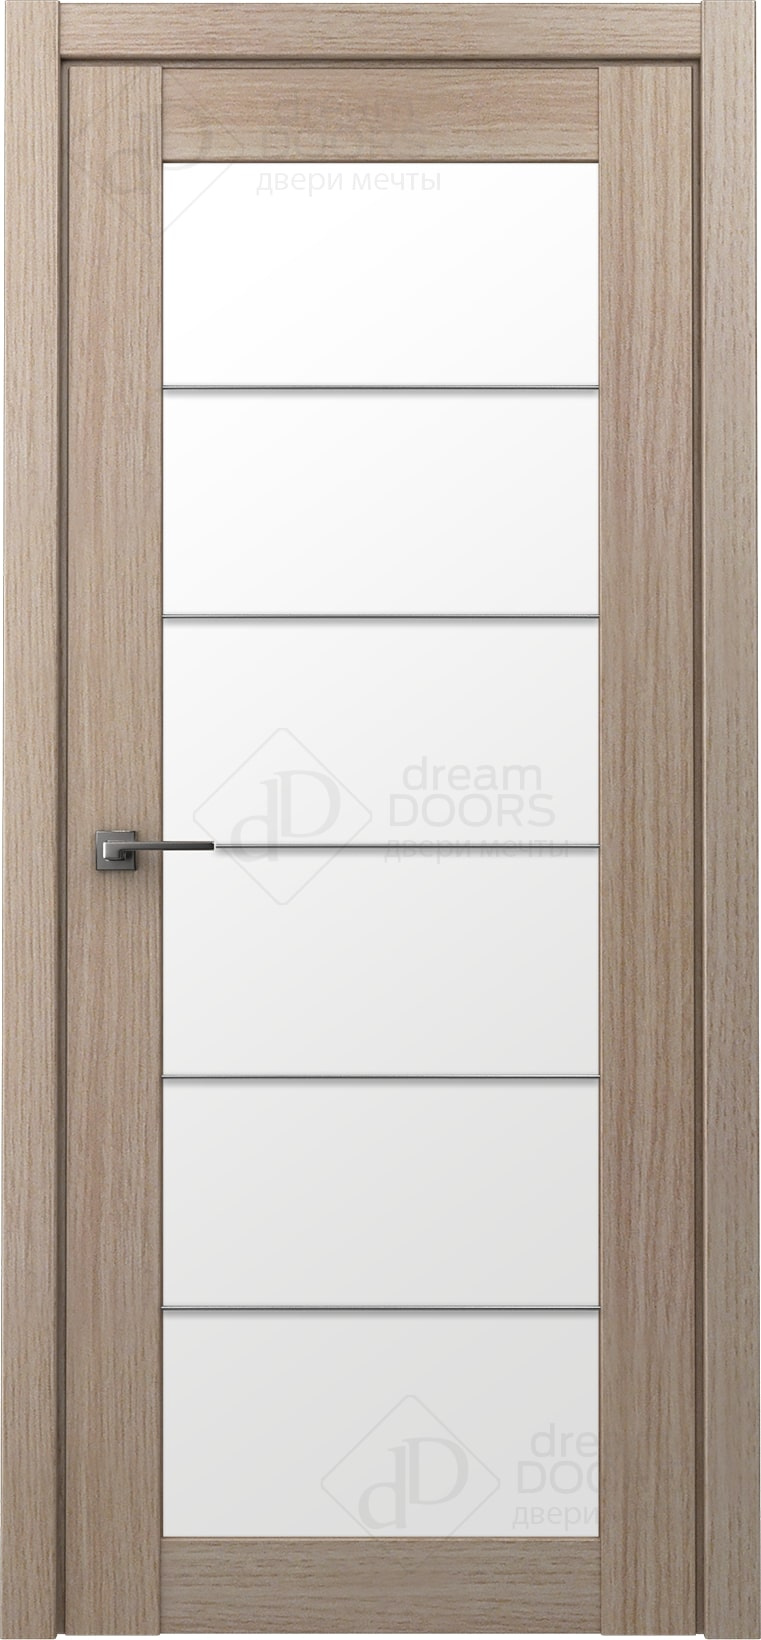 Dream Doors Межкомнатная дверь Престиж с молдингом ПО, арт. 16437 - фото №4